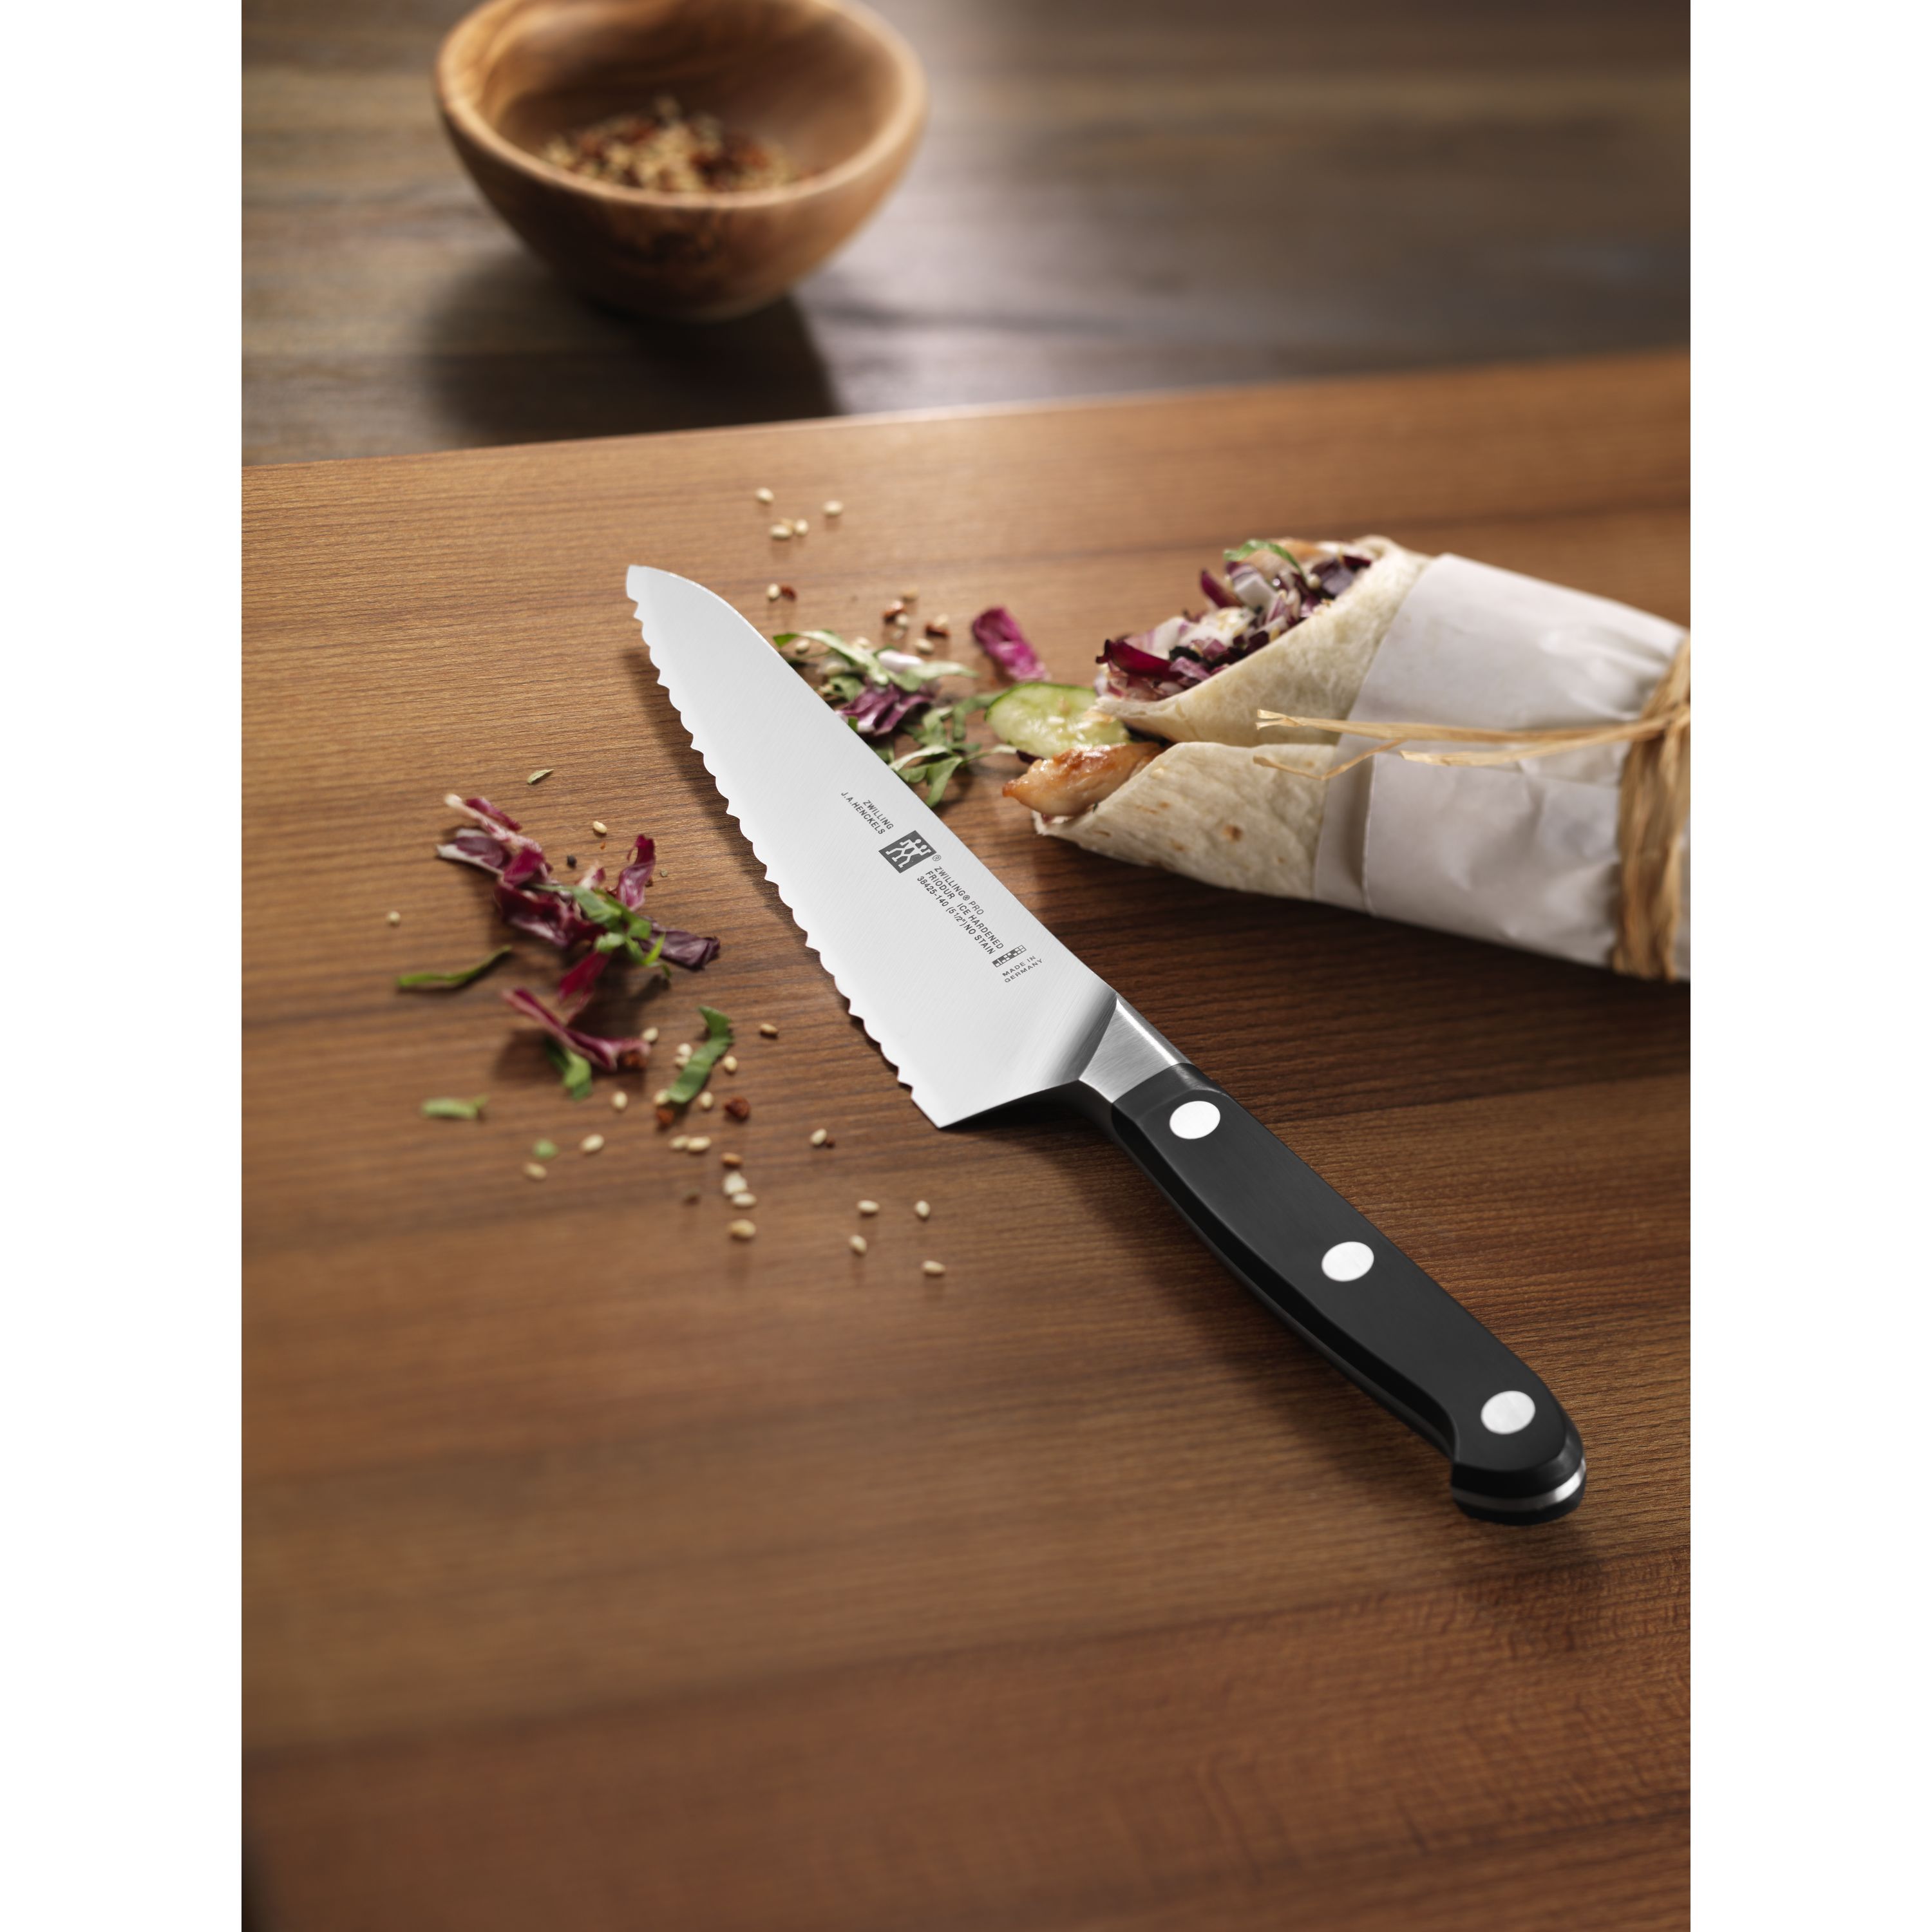 Zwilling Gourmet 5.5 Serrated Prep Knife